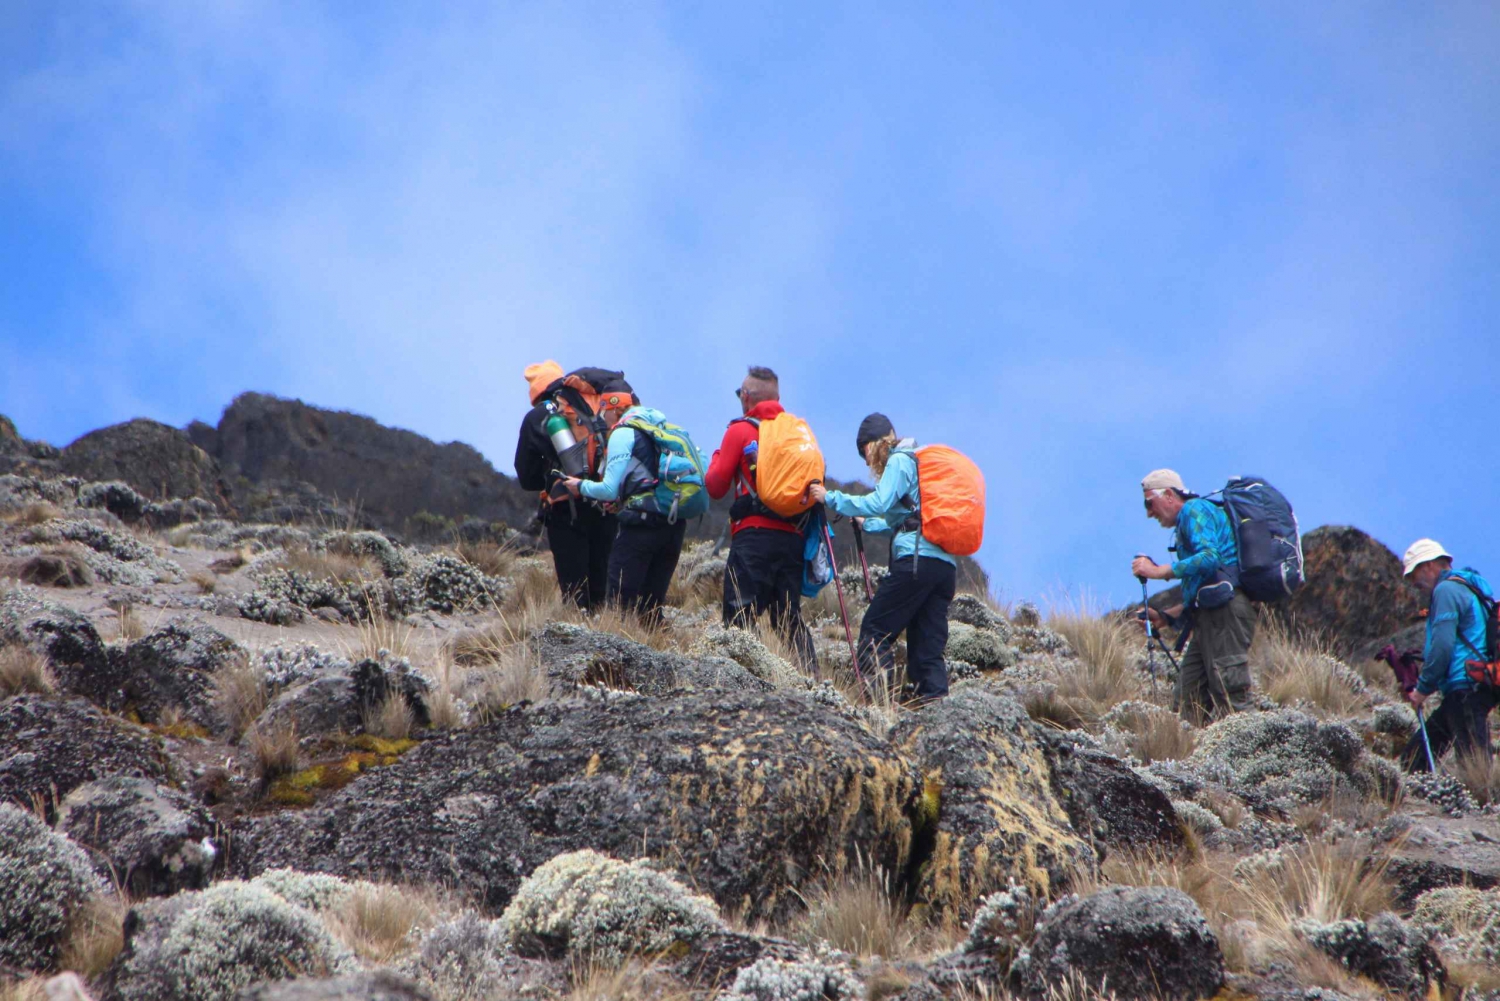 7 dagars Machame Route Kilimanjaro klättring i grupp